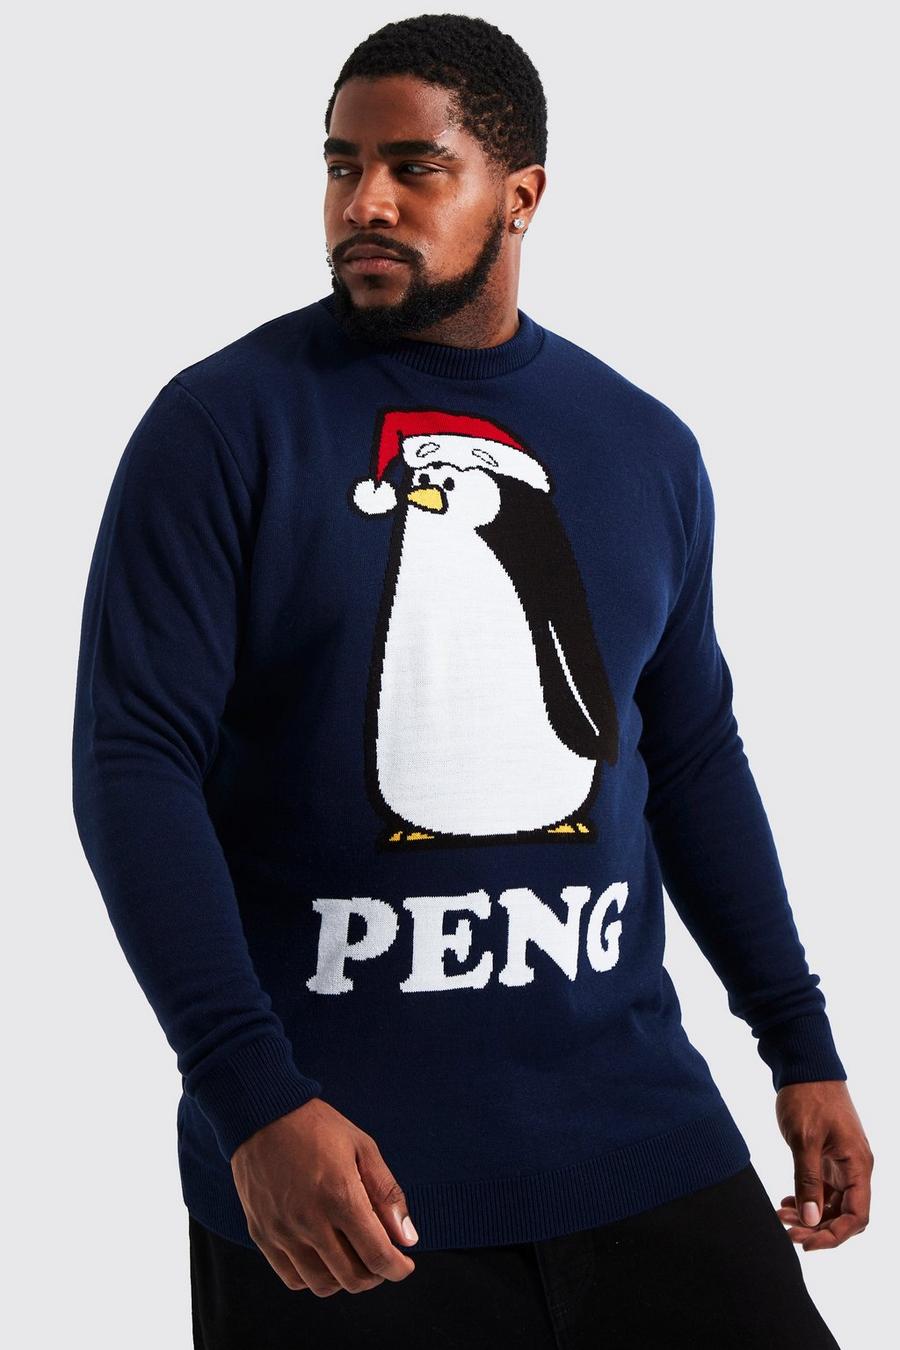 Plus Peng Novelty Weihnachtspullover, Navy